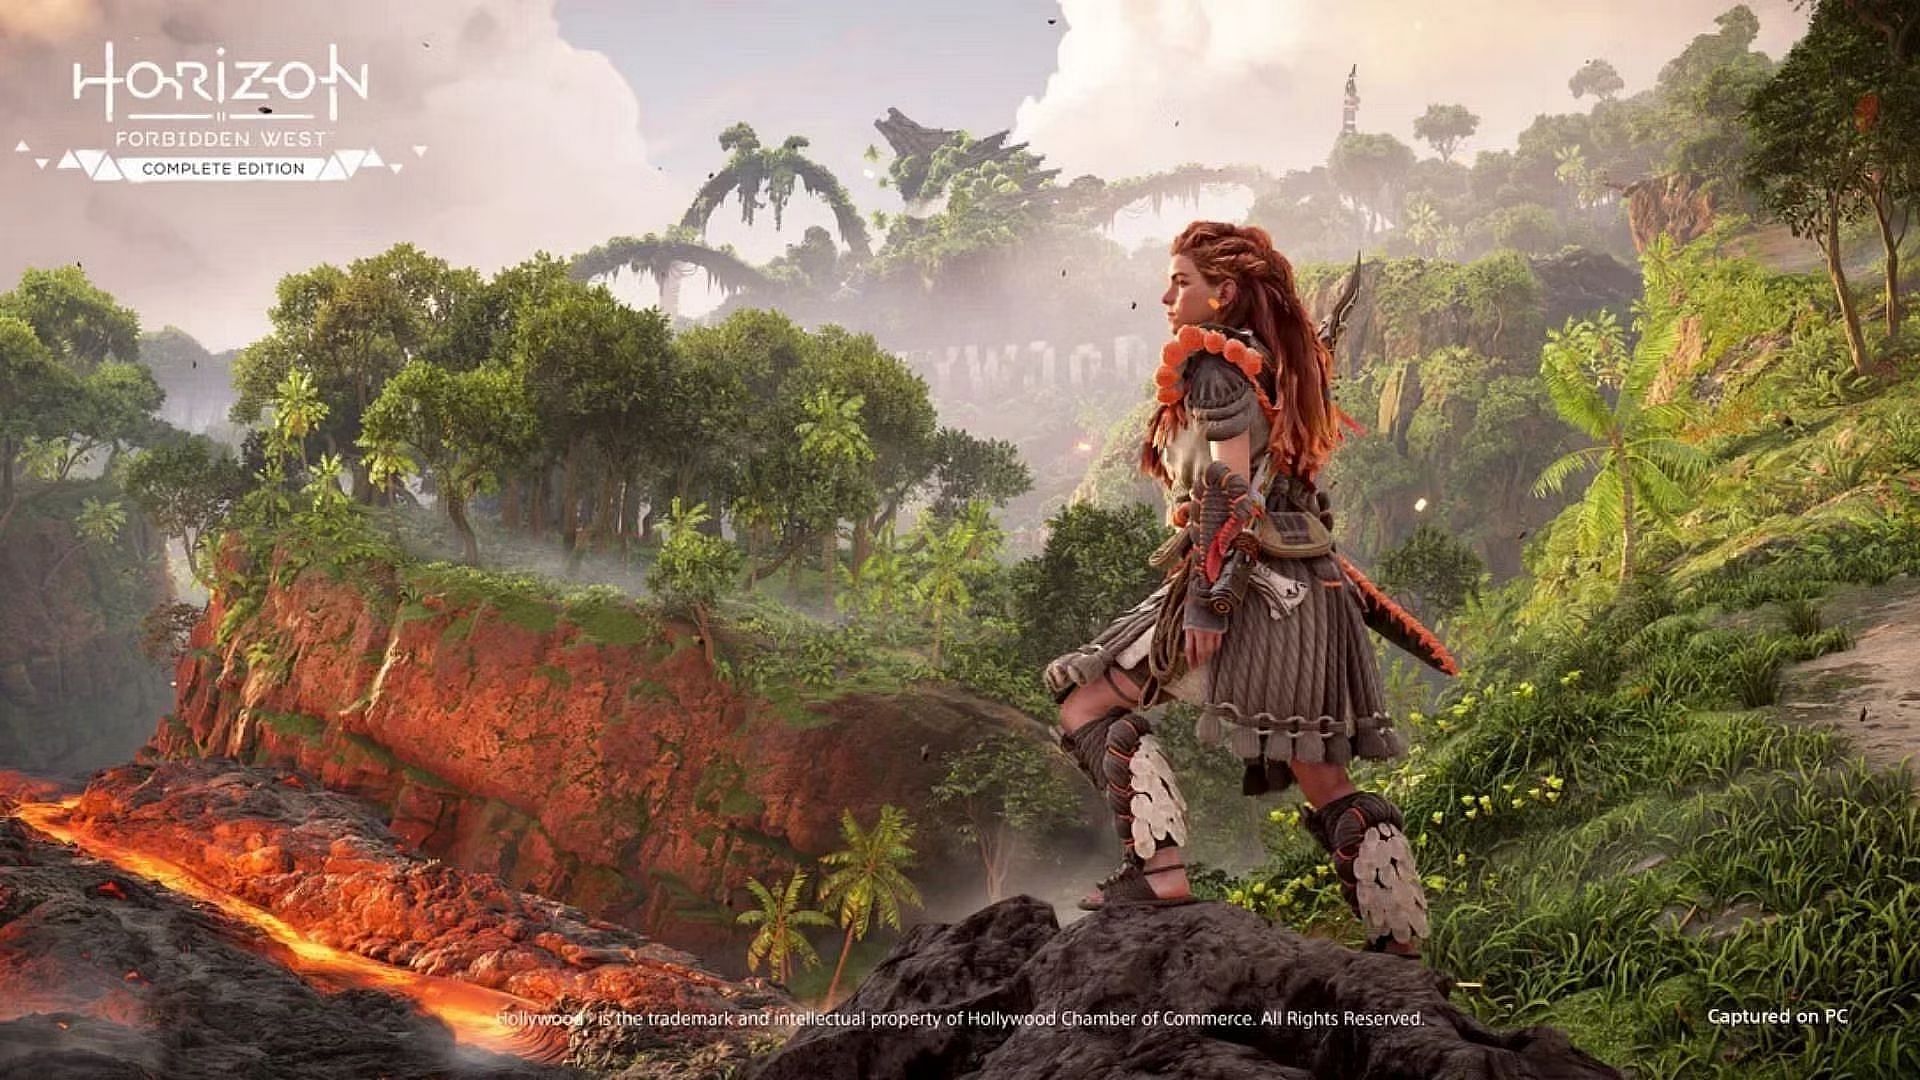 Horizon Forbidden West features breathtaking visuals on PC (Image via PlayStation/Guerrilla Games)